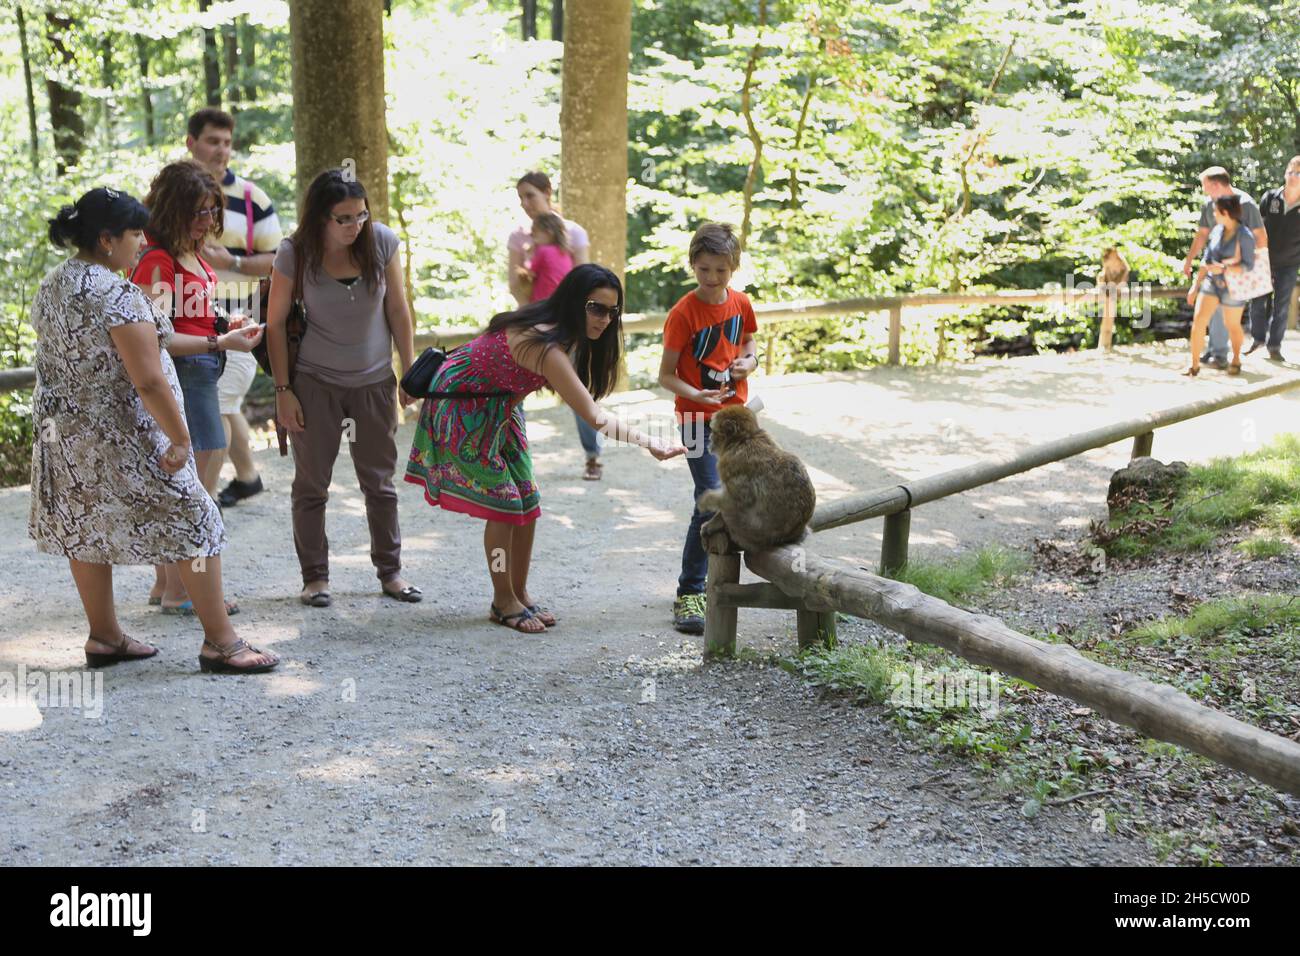 barbary ape, barbary macaque (Macaca sylvanus), visitors feed barbary apes in a zoo, Germany Stock Photo